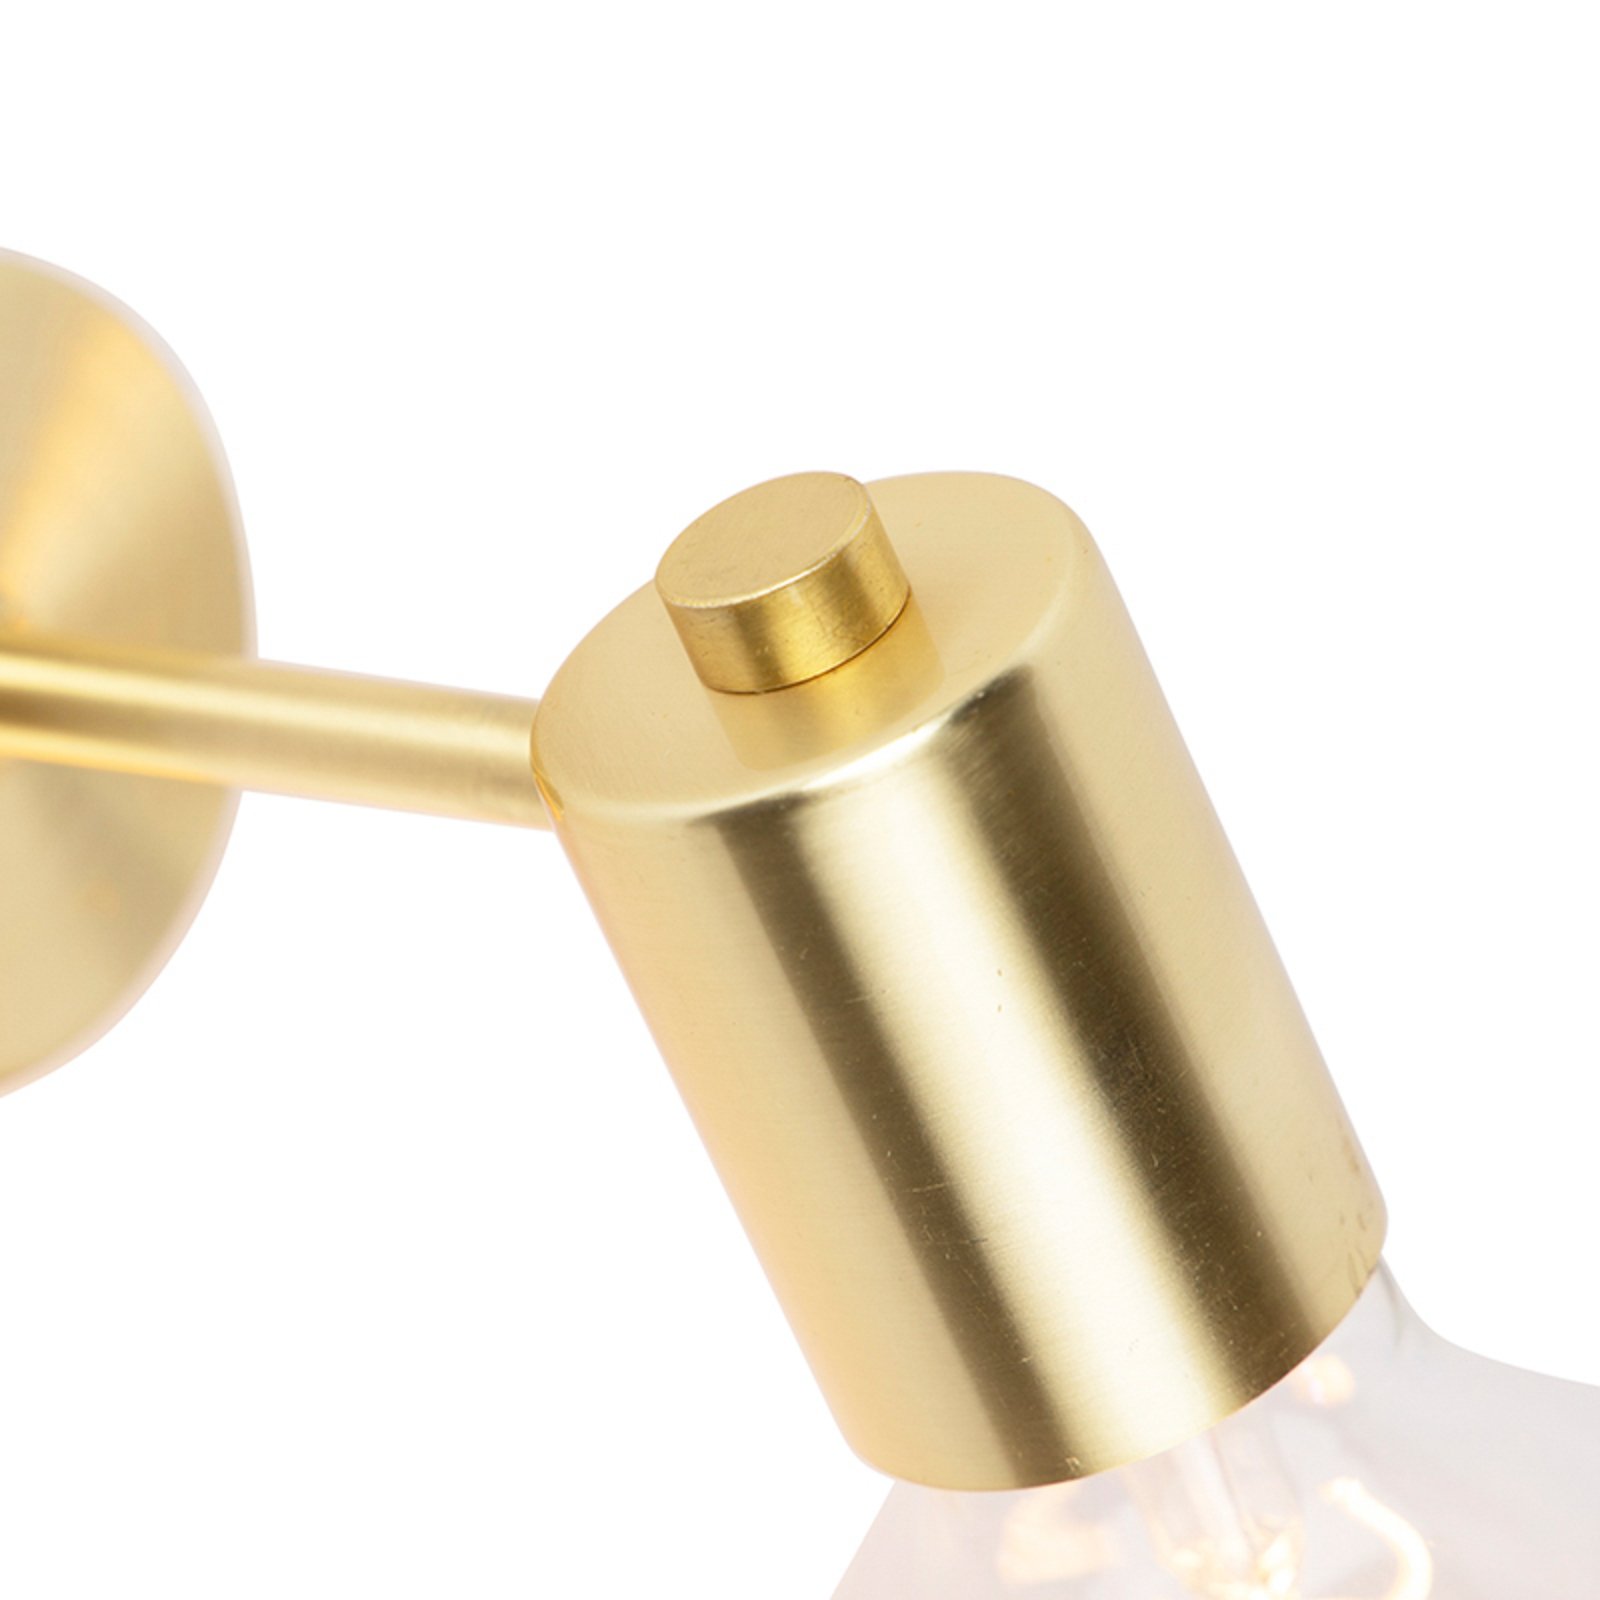 Wandlamp Facil, 1-lamp, messing/goud